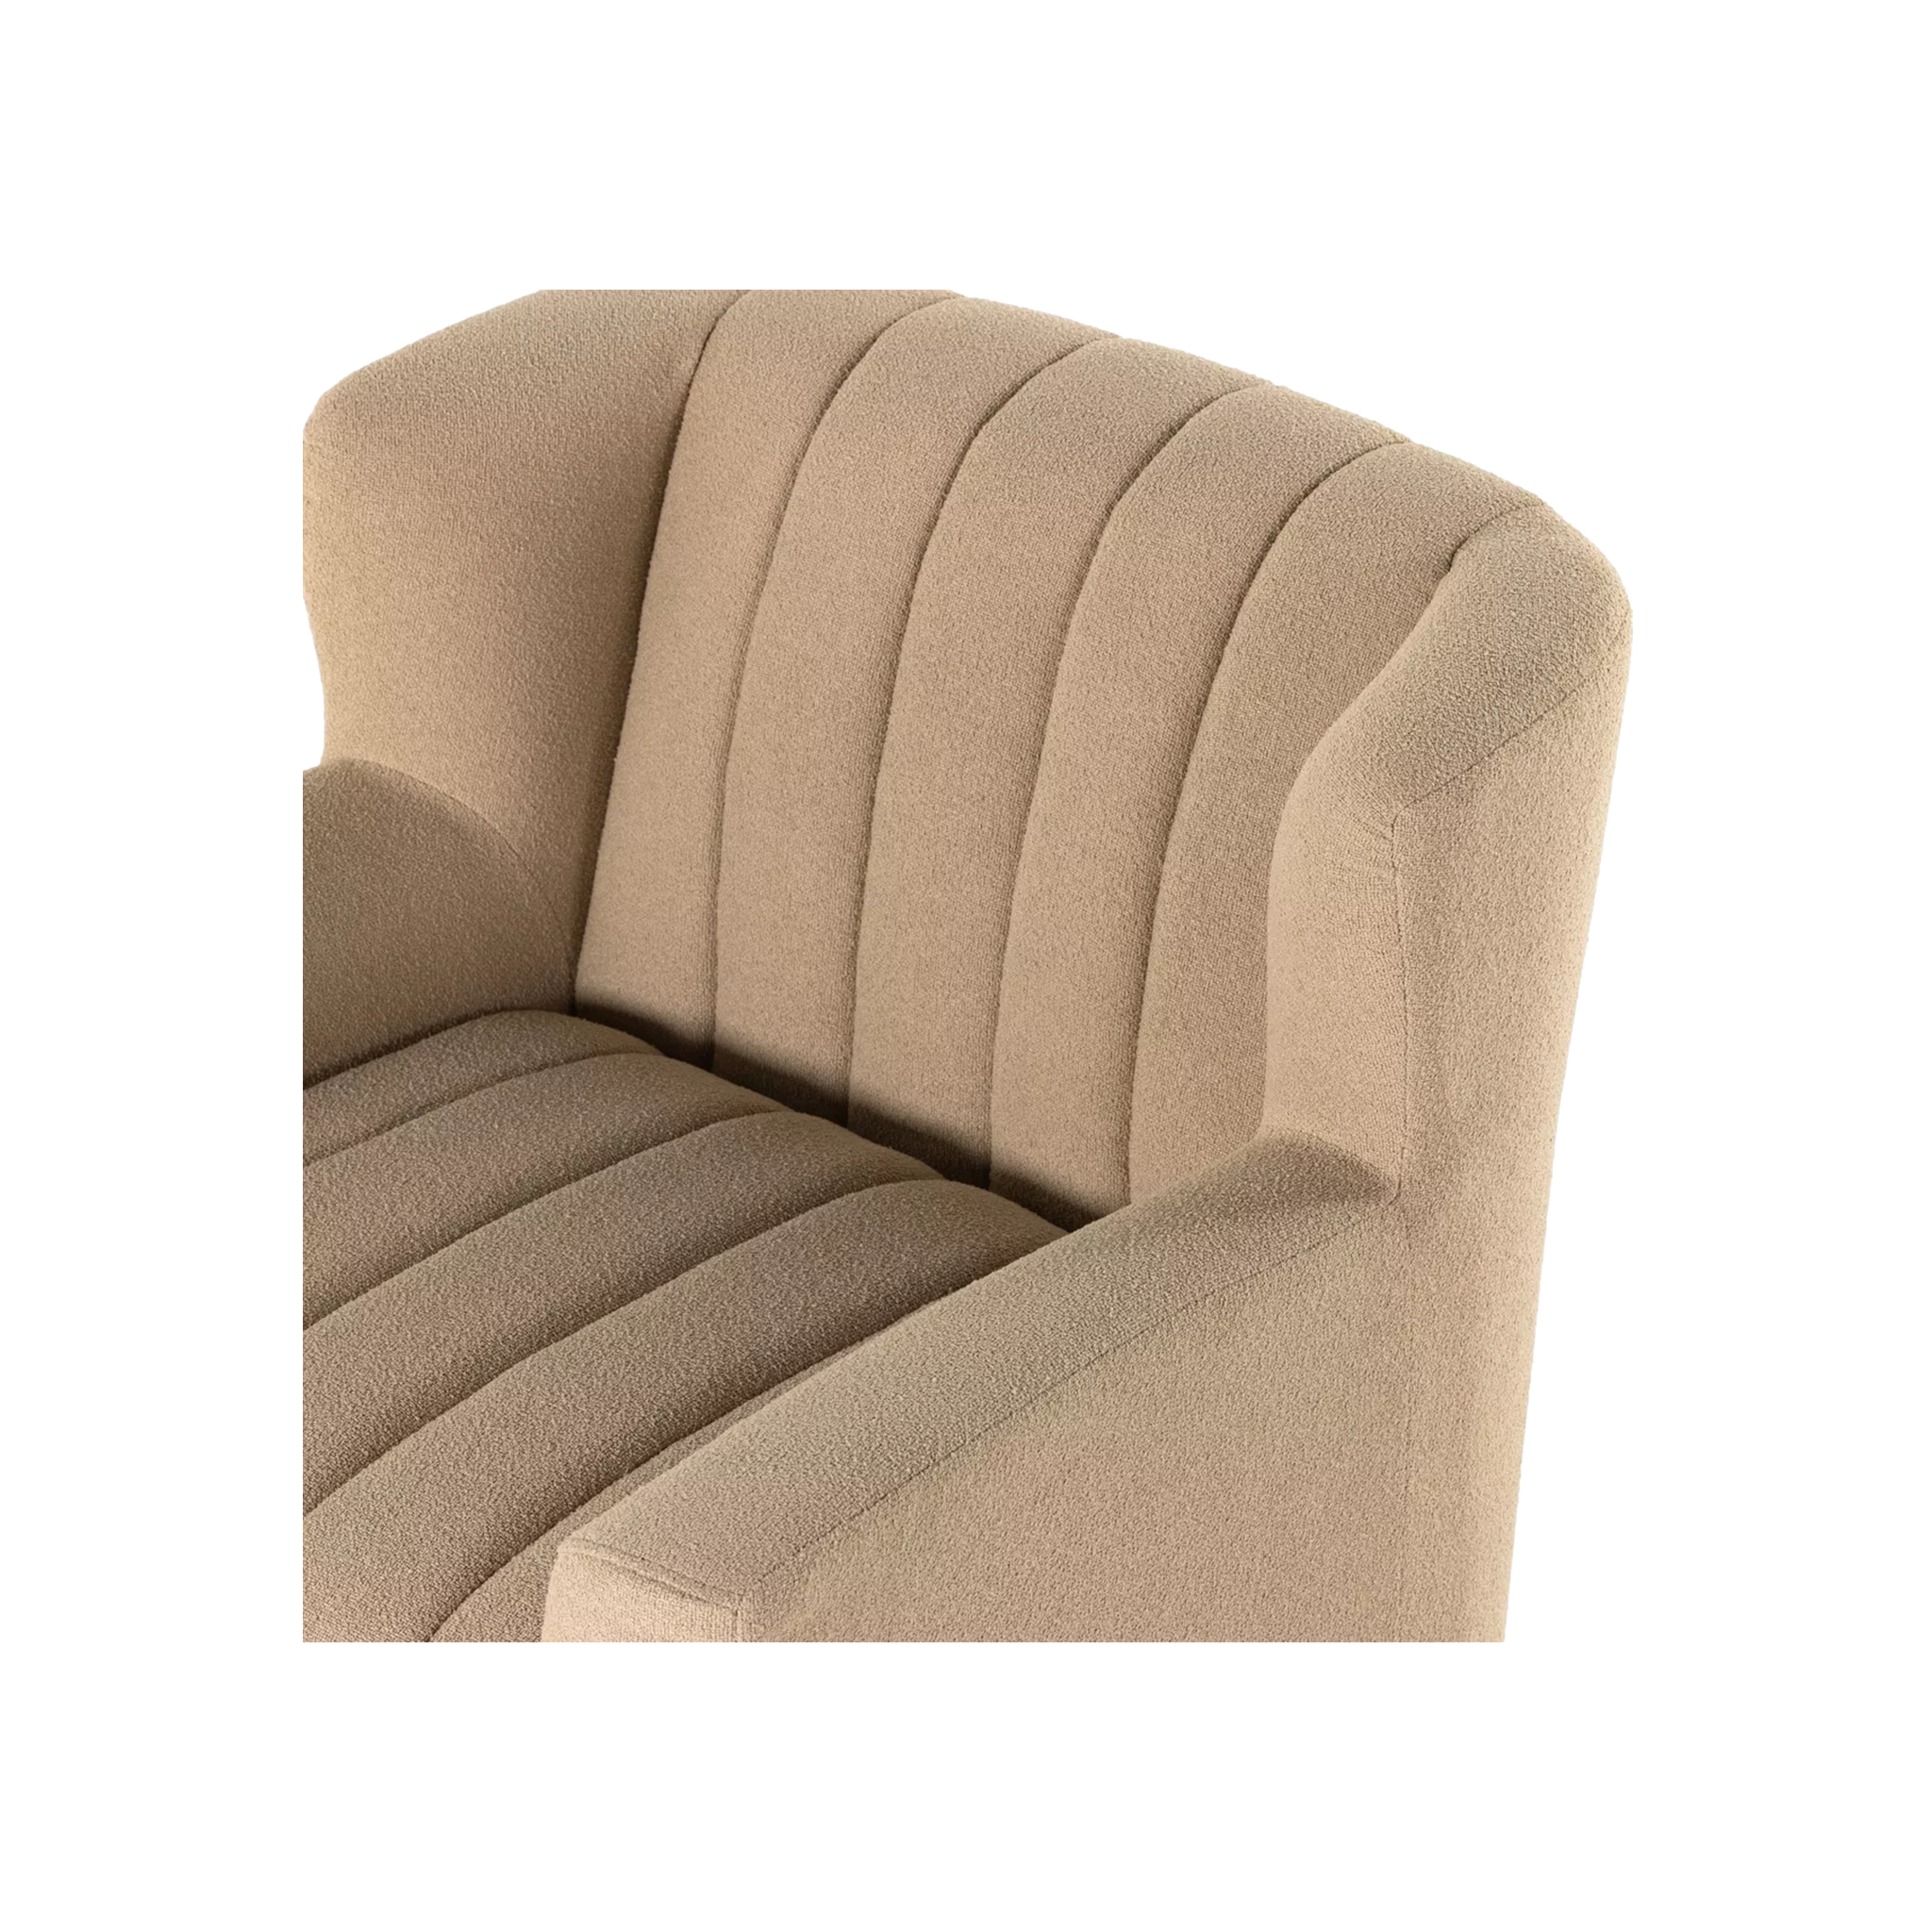 Elora Chair